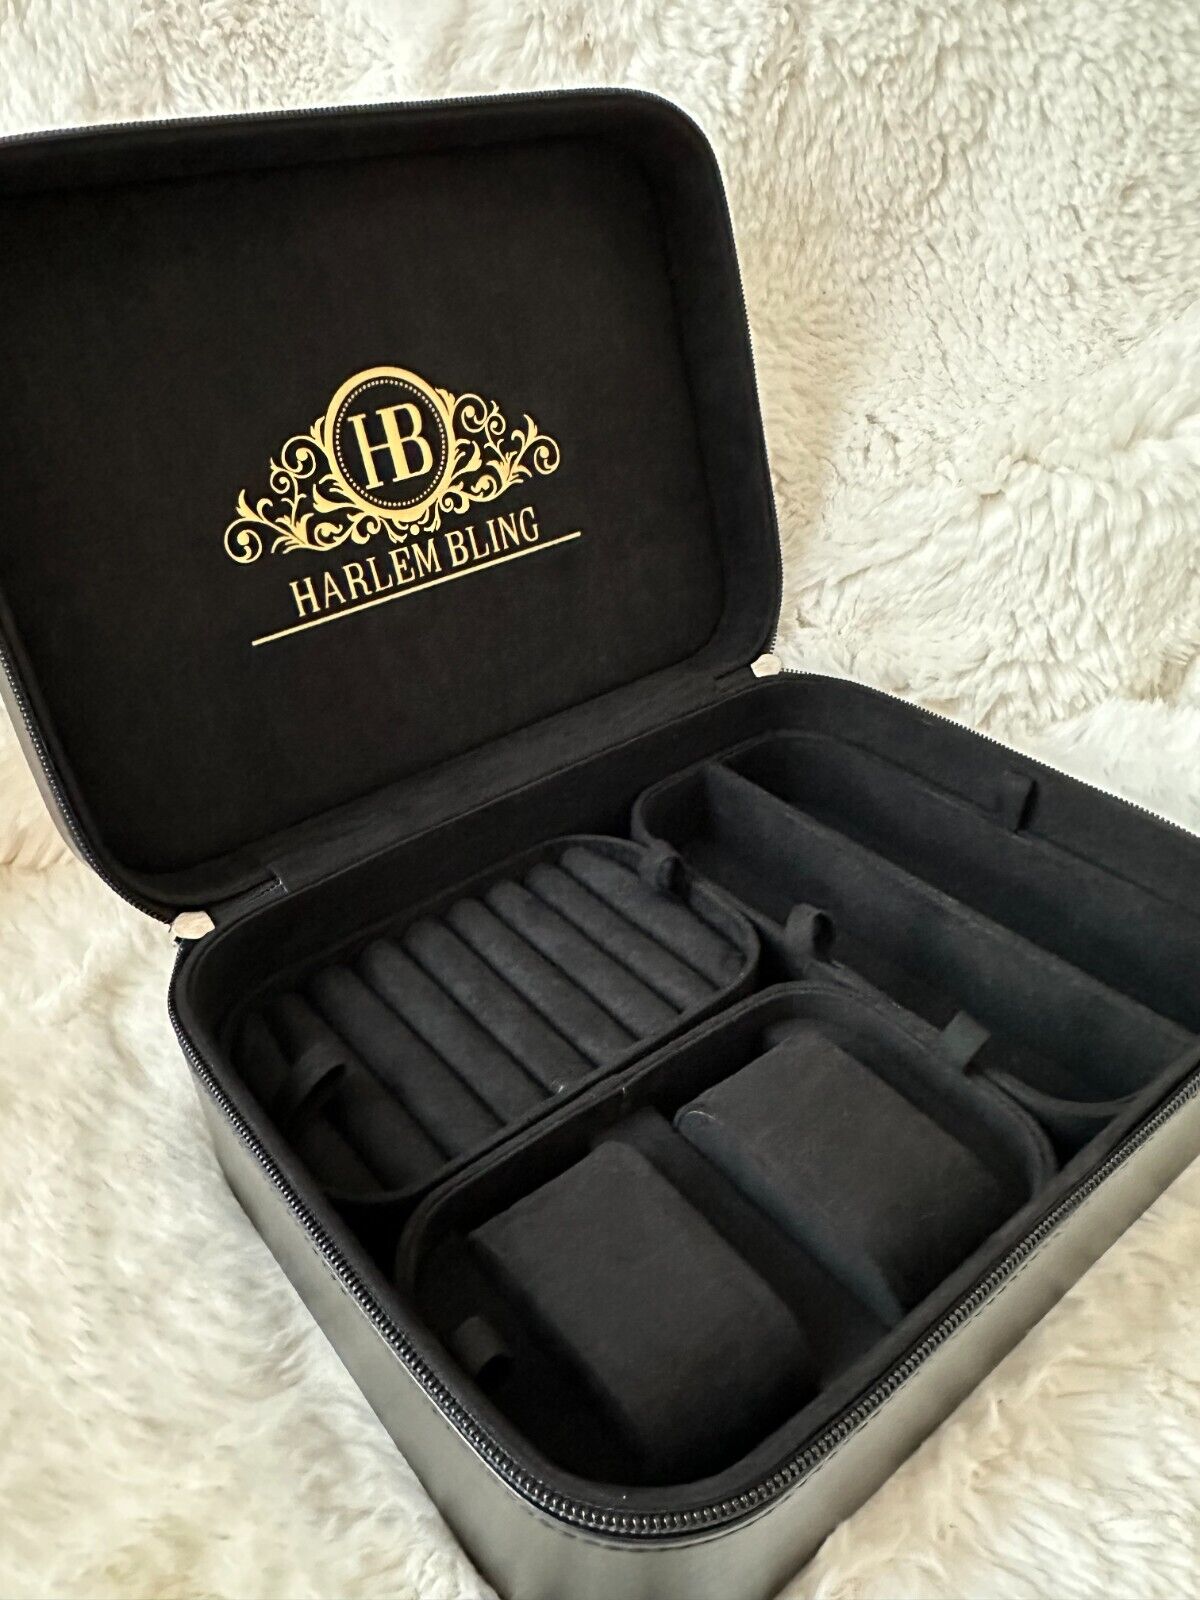 Harlembling Leather Travel Jewelry Box Case